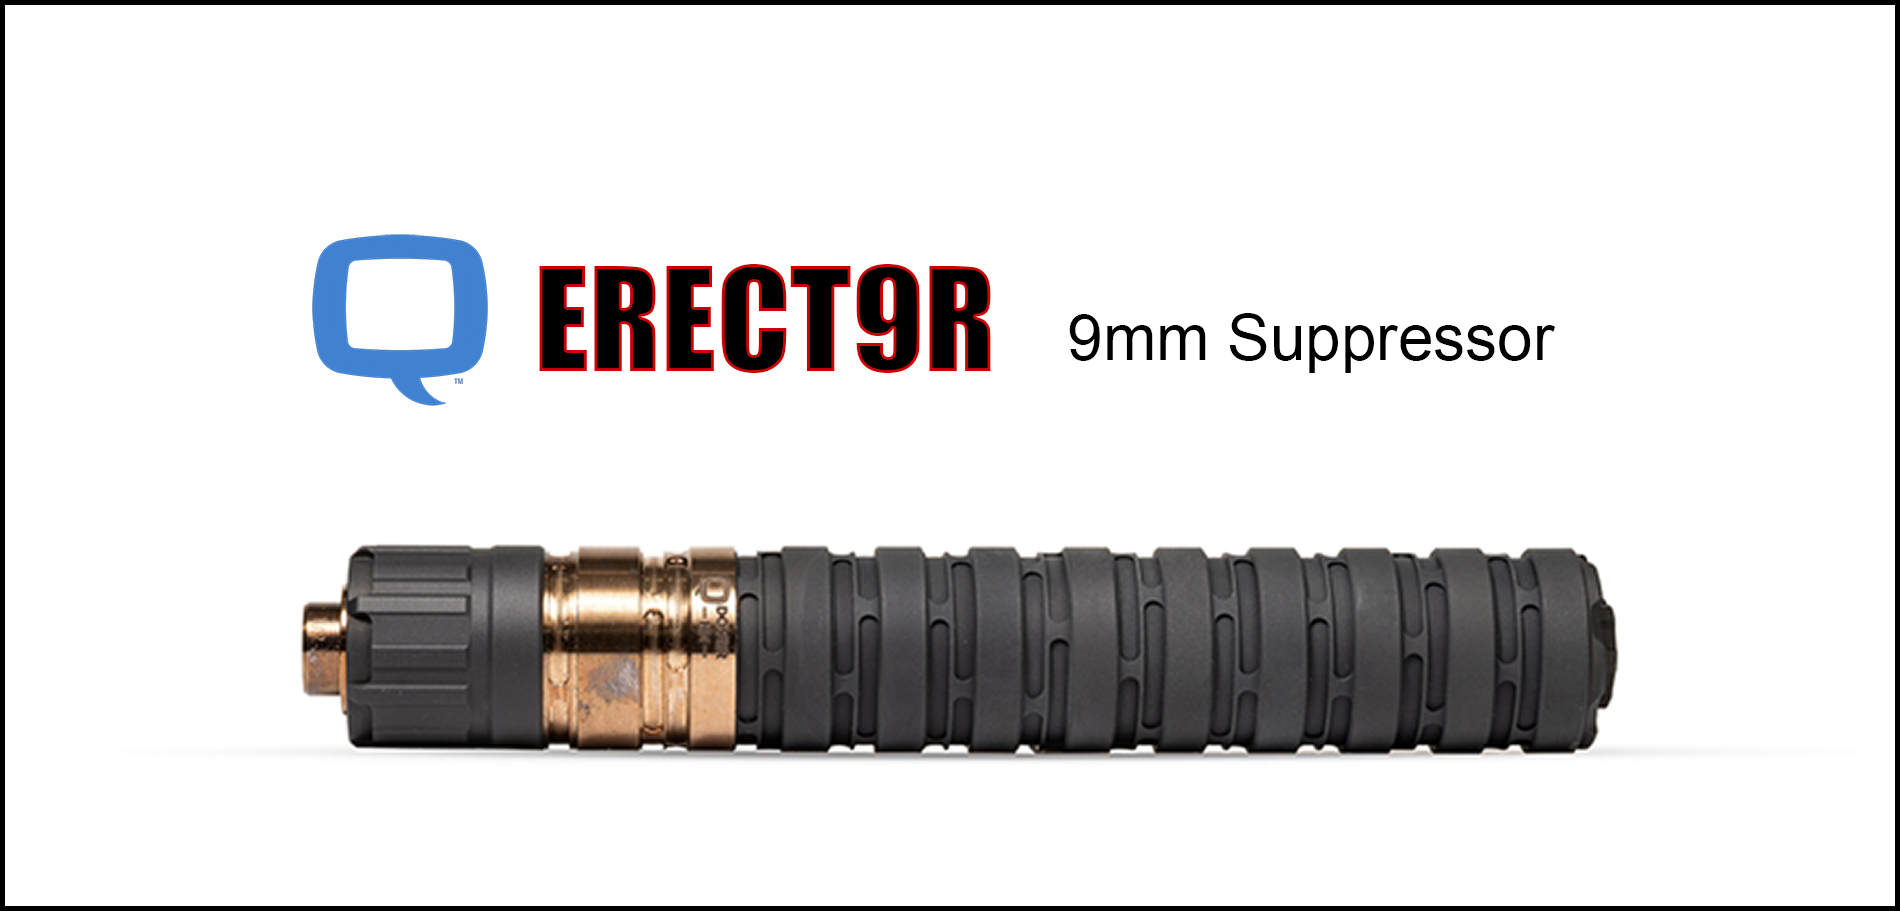 Q Erector 9mm Suppressor Image